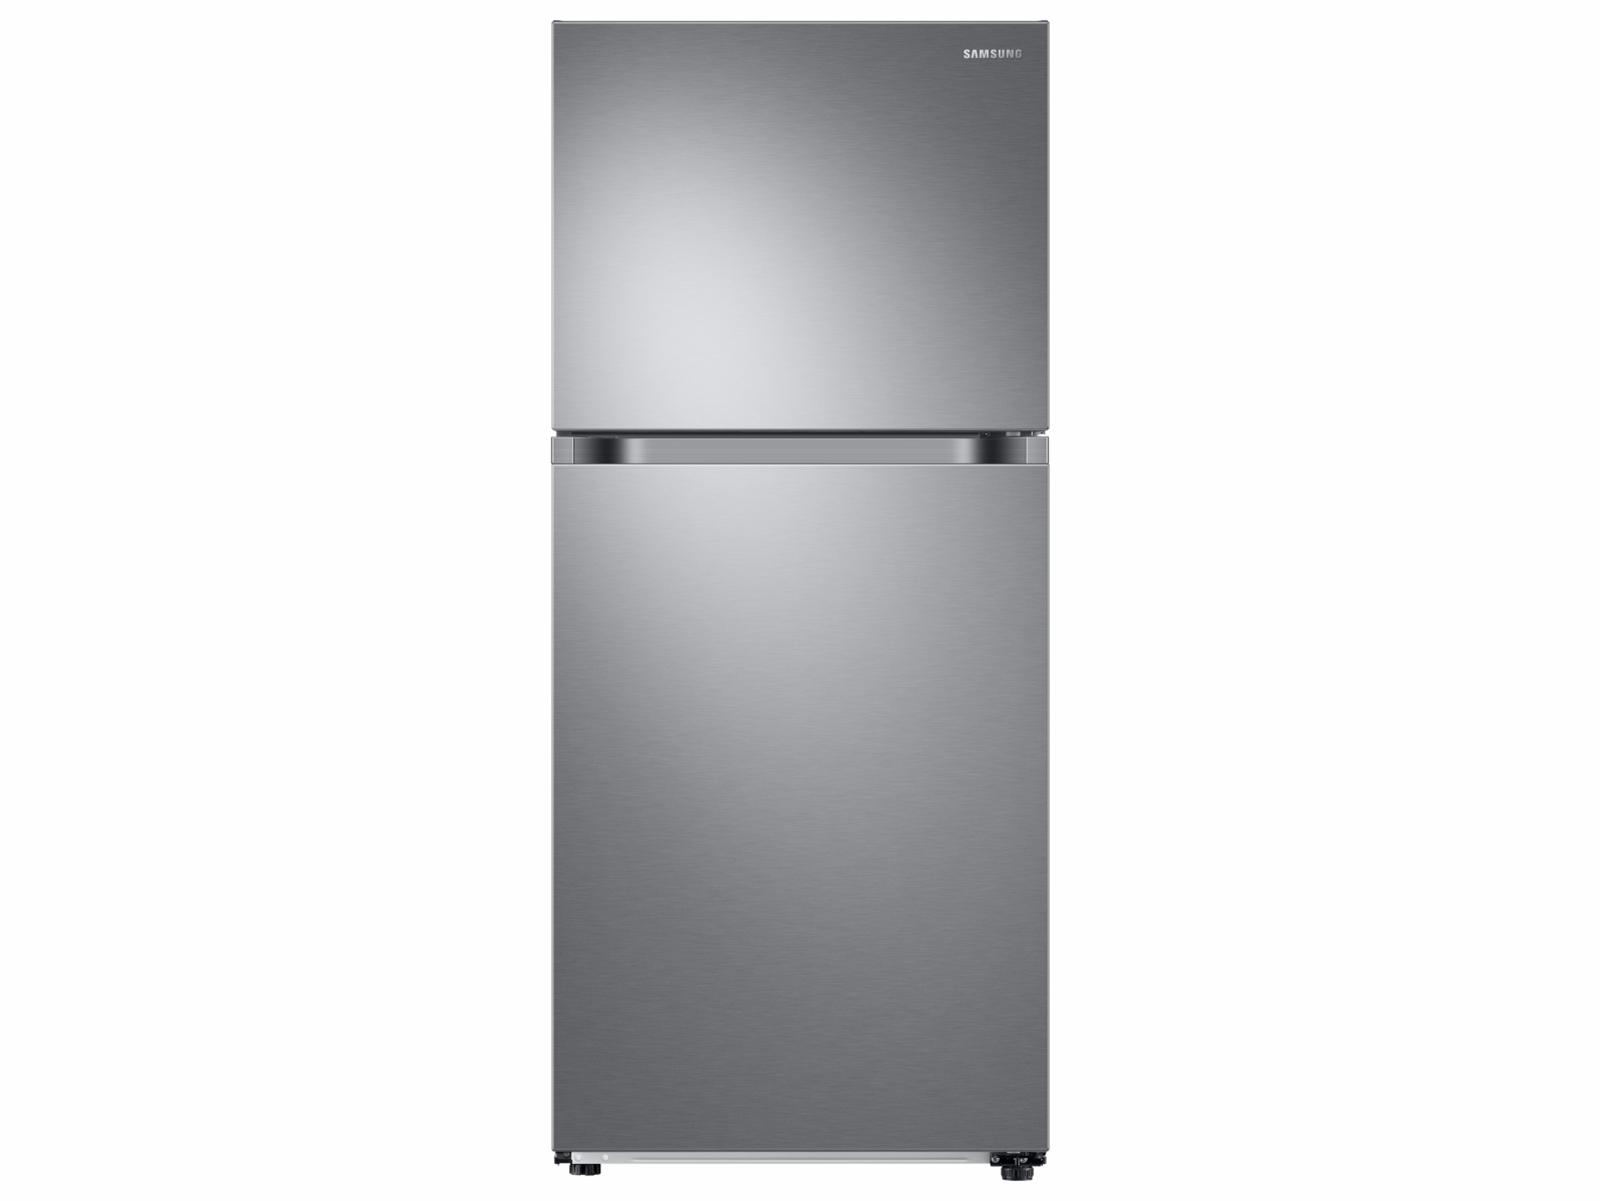 Photos - Fridge Samsung 18 cu. ft. Top Freezer Refrigerator with FlexZone™ in Silver(RT18M 